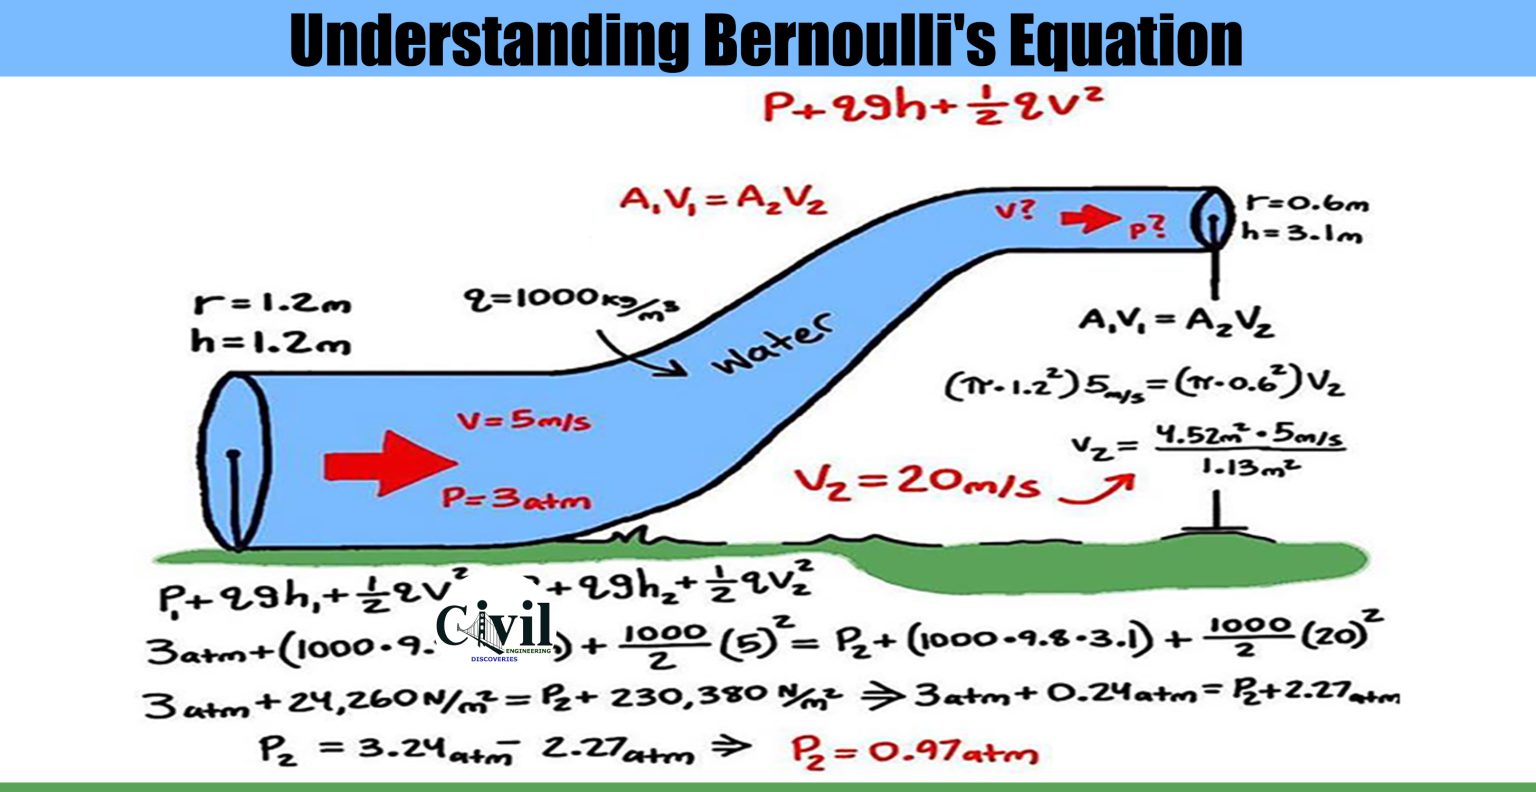 hypothesis test bernoulli